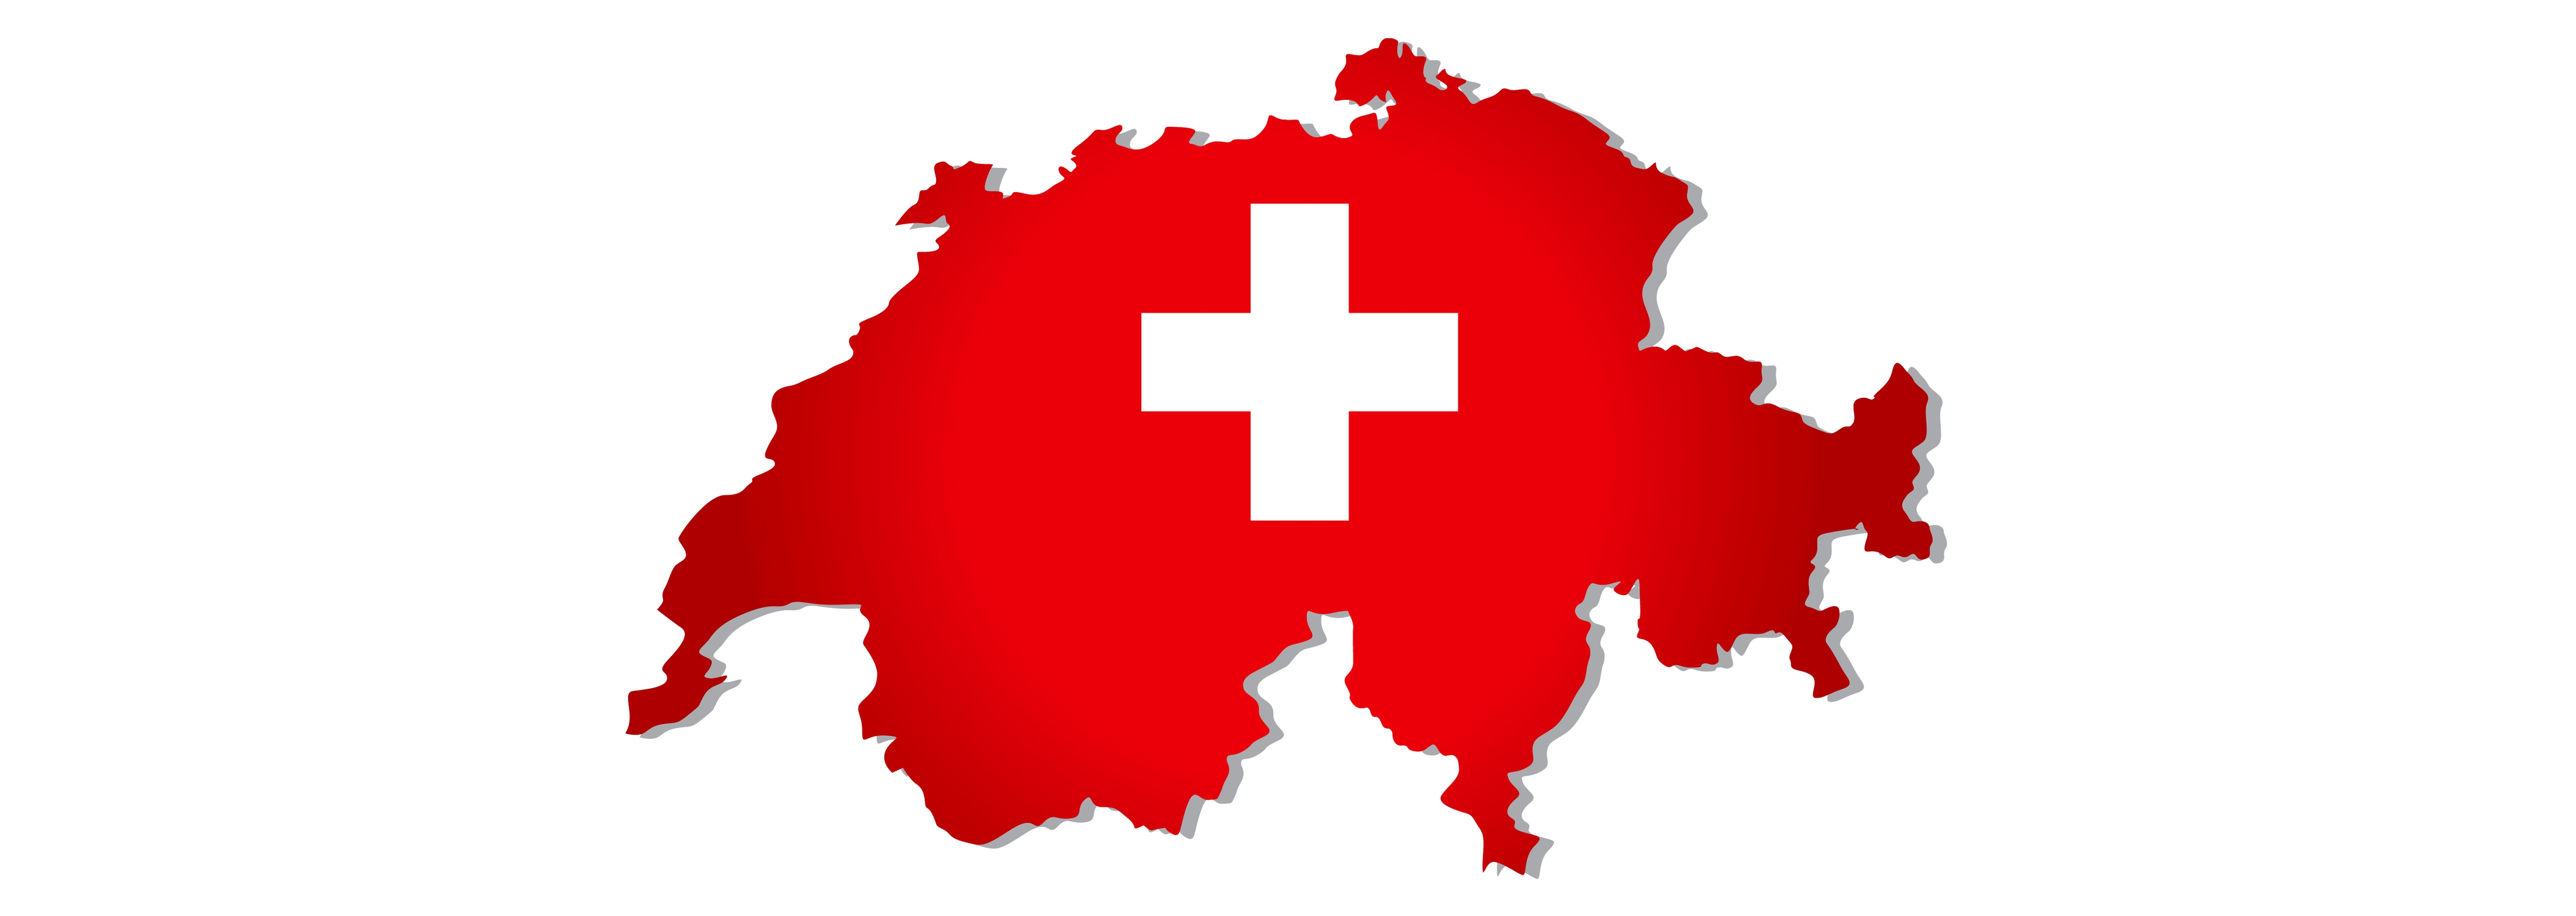 Switzerland in 2018 – The Re-birth of Federalism?